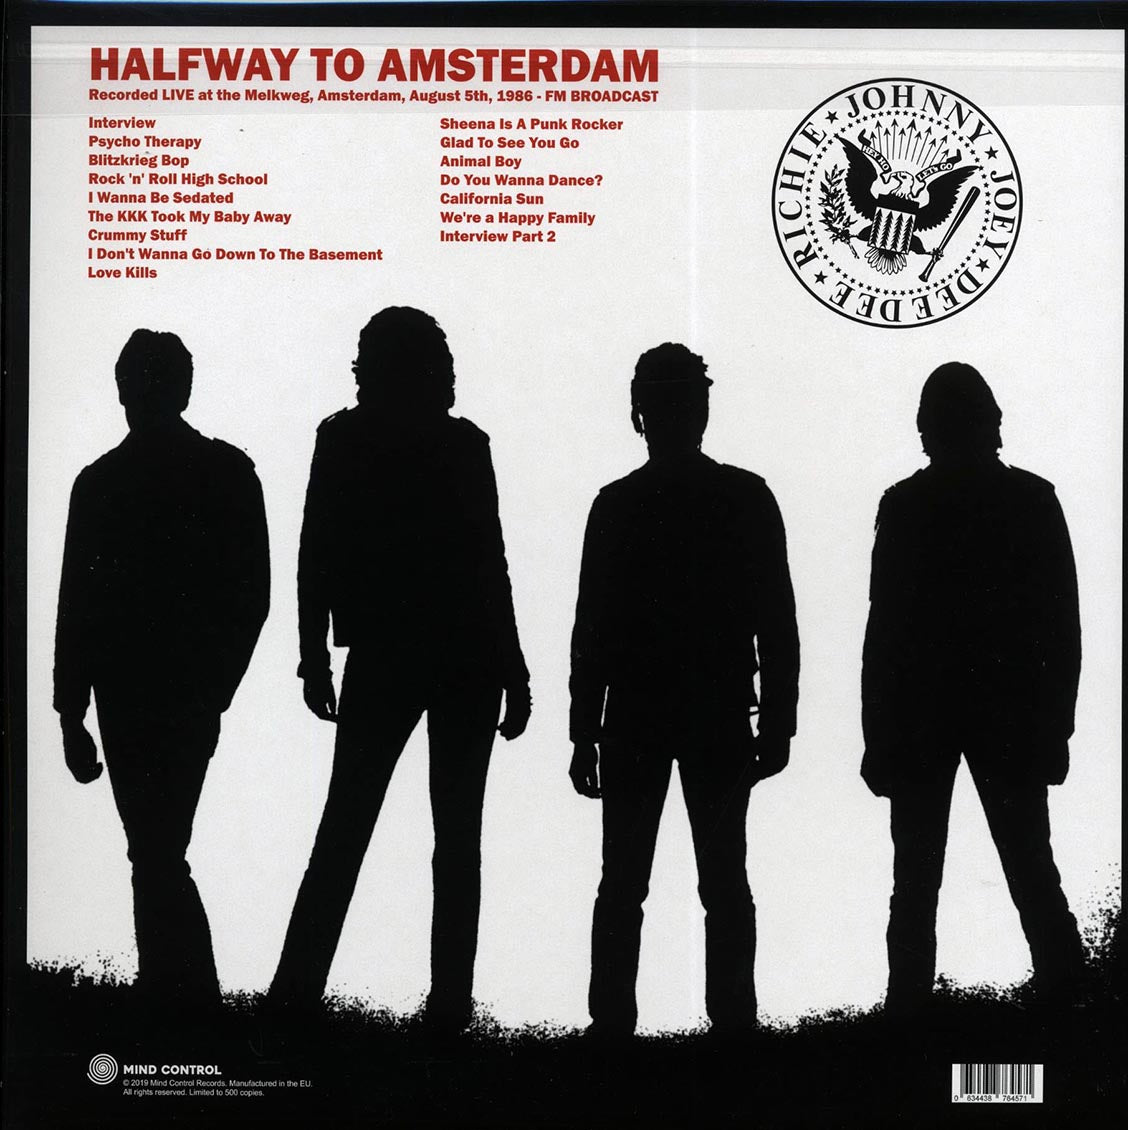 The Ramones - Halfway To Amsterdam: Live At The Melkweg August 5th, 1986 FM Broadcast (ltd. 500 copies made) (orange vinyl) - Vinyl LP, LP